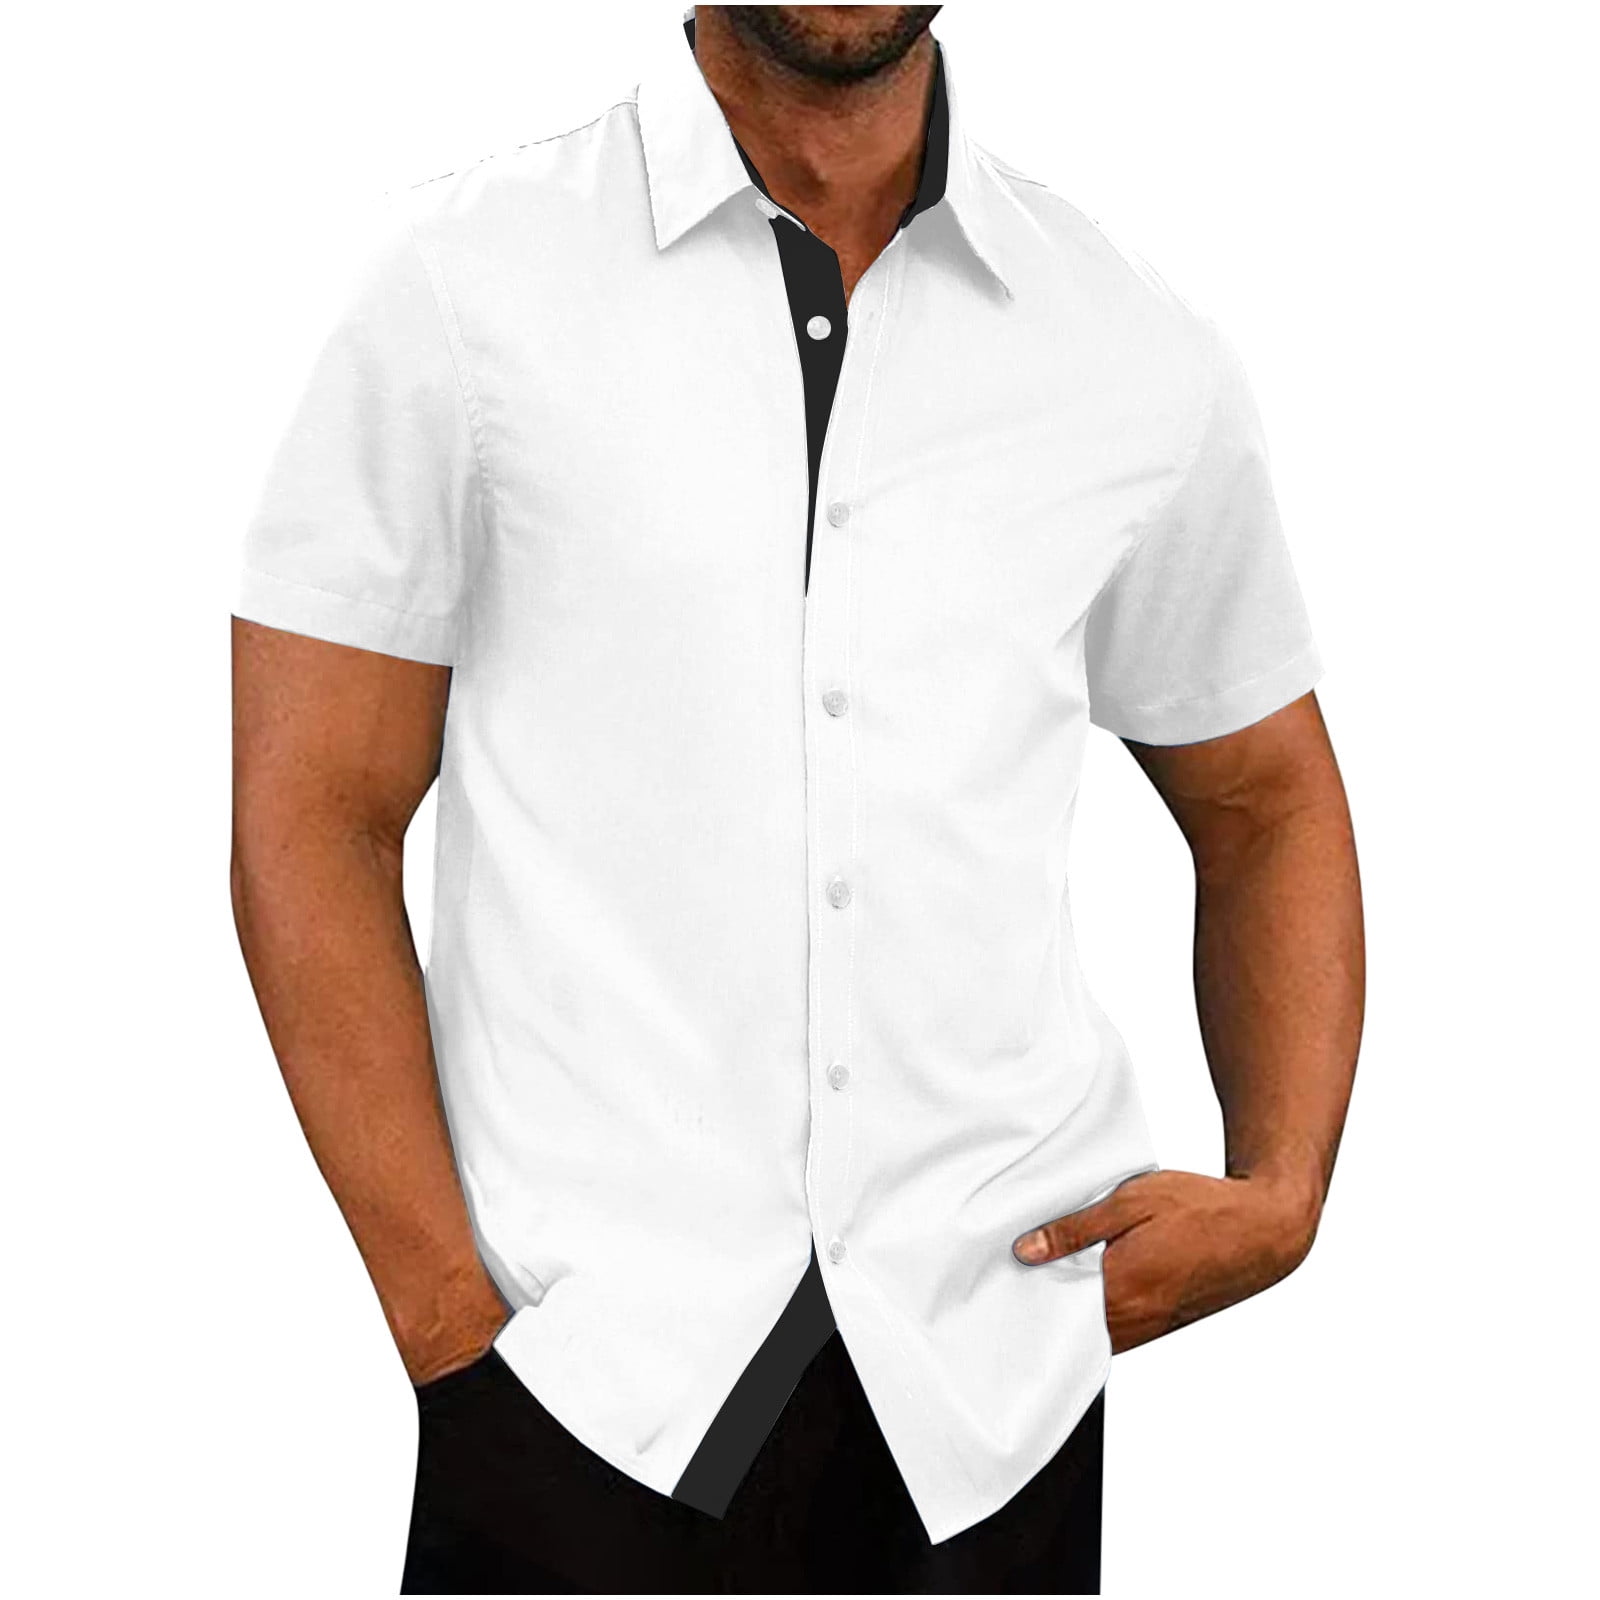 RYRJJ On Clearance Men's Short Sleeve Regular Fit Dress Shirts Button Down  Shirts Summer Casual Beach Shirt with Chest Pocket Light Blue L 